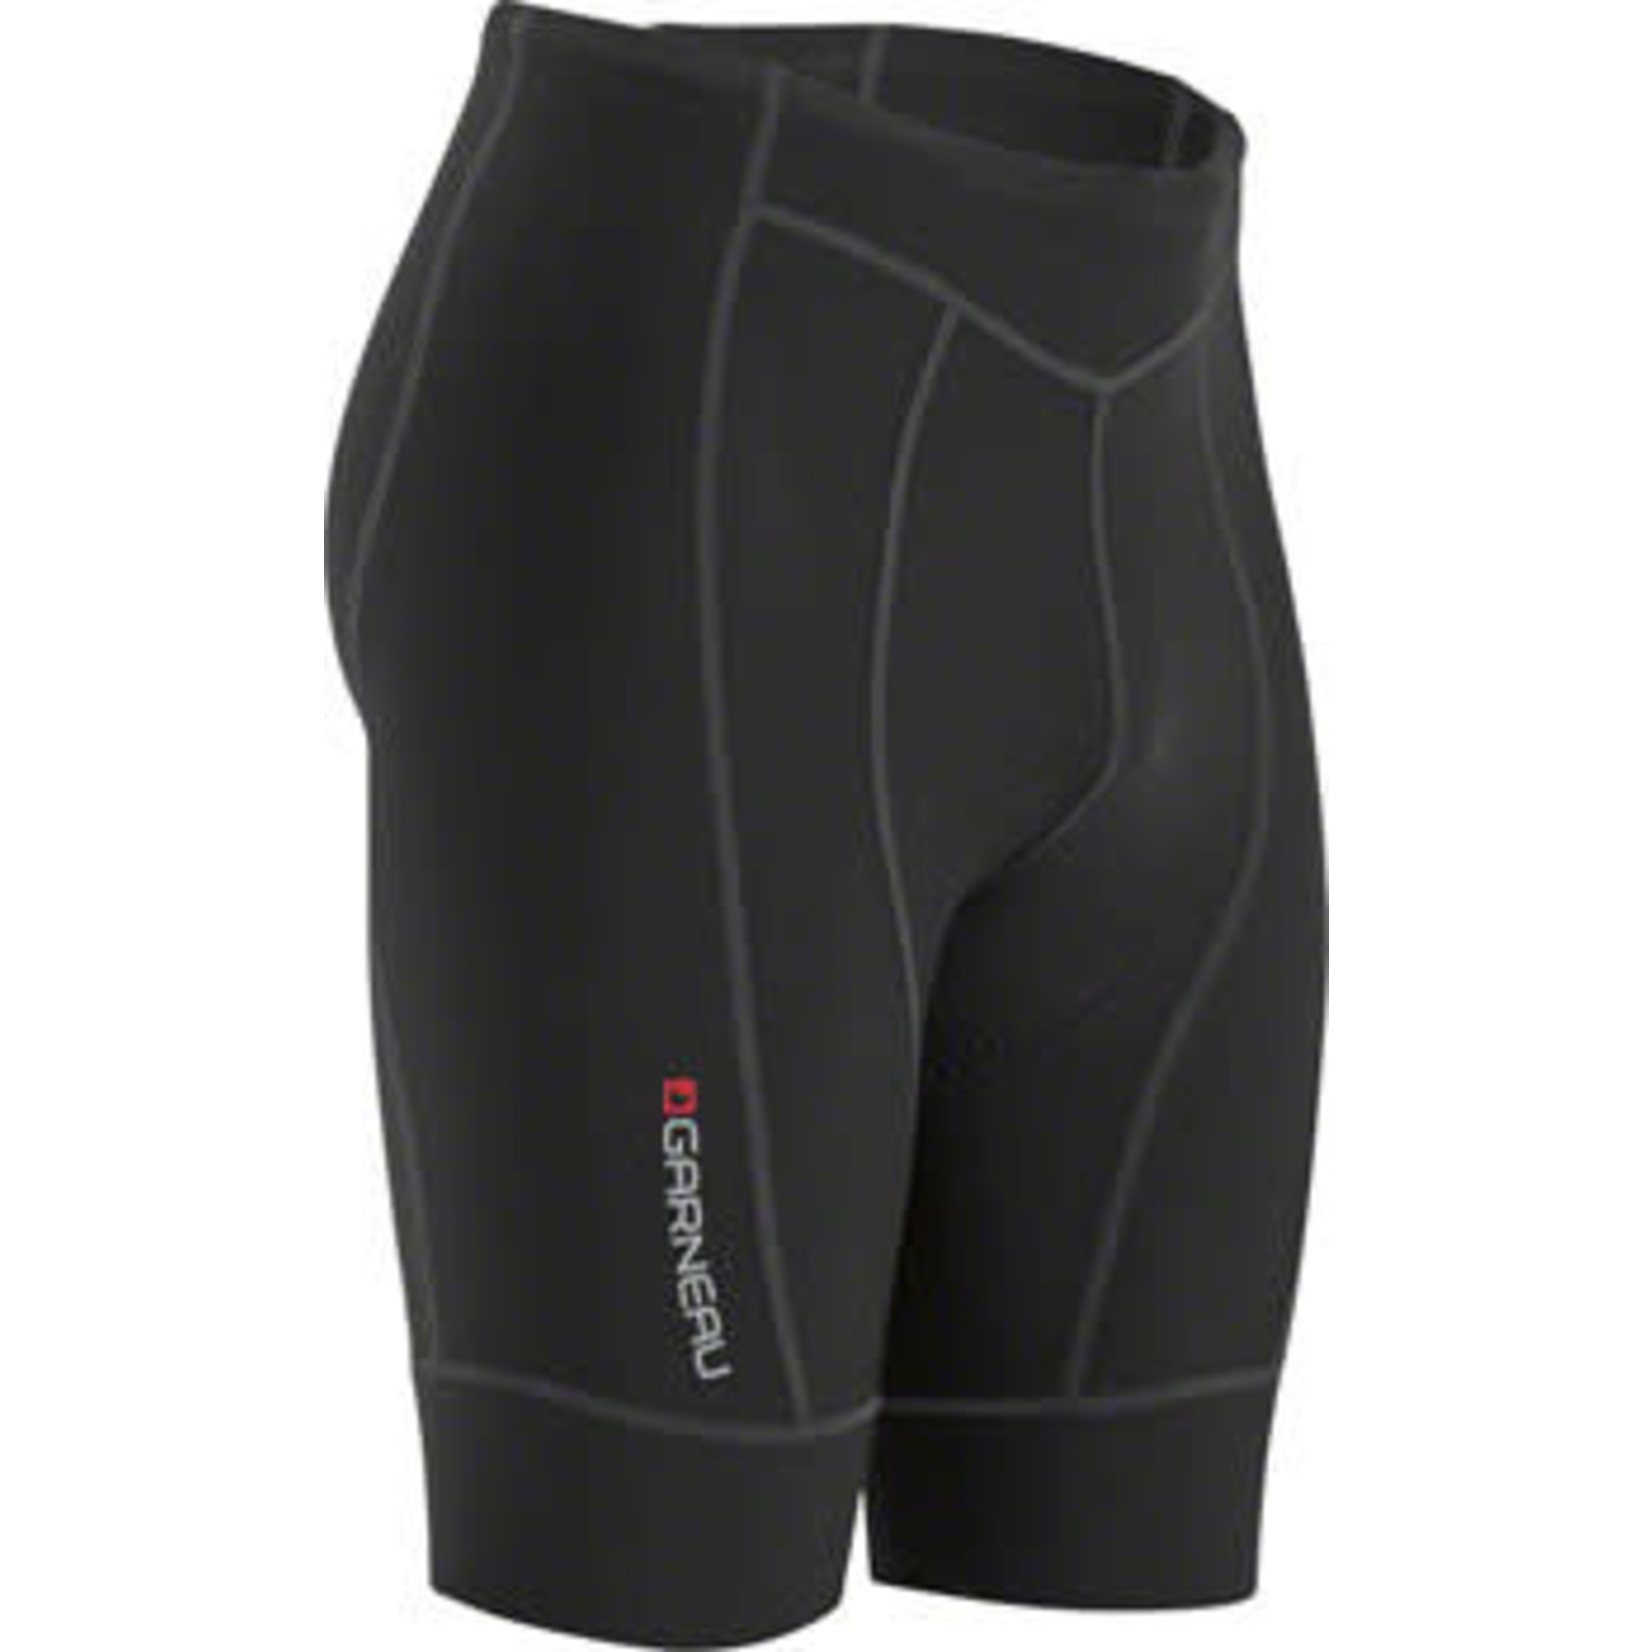 Garneau Garneau Fit Sensor 2 Shorts - Black, Men's, Medium